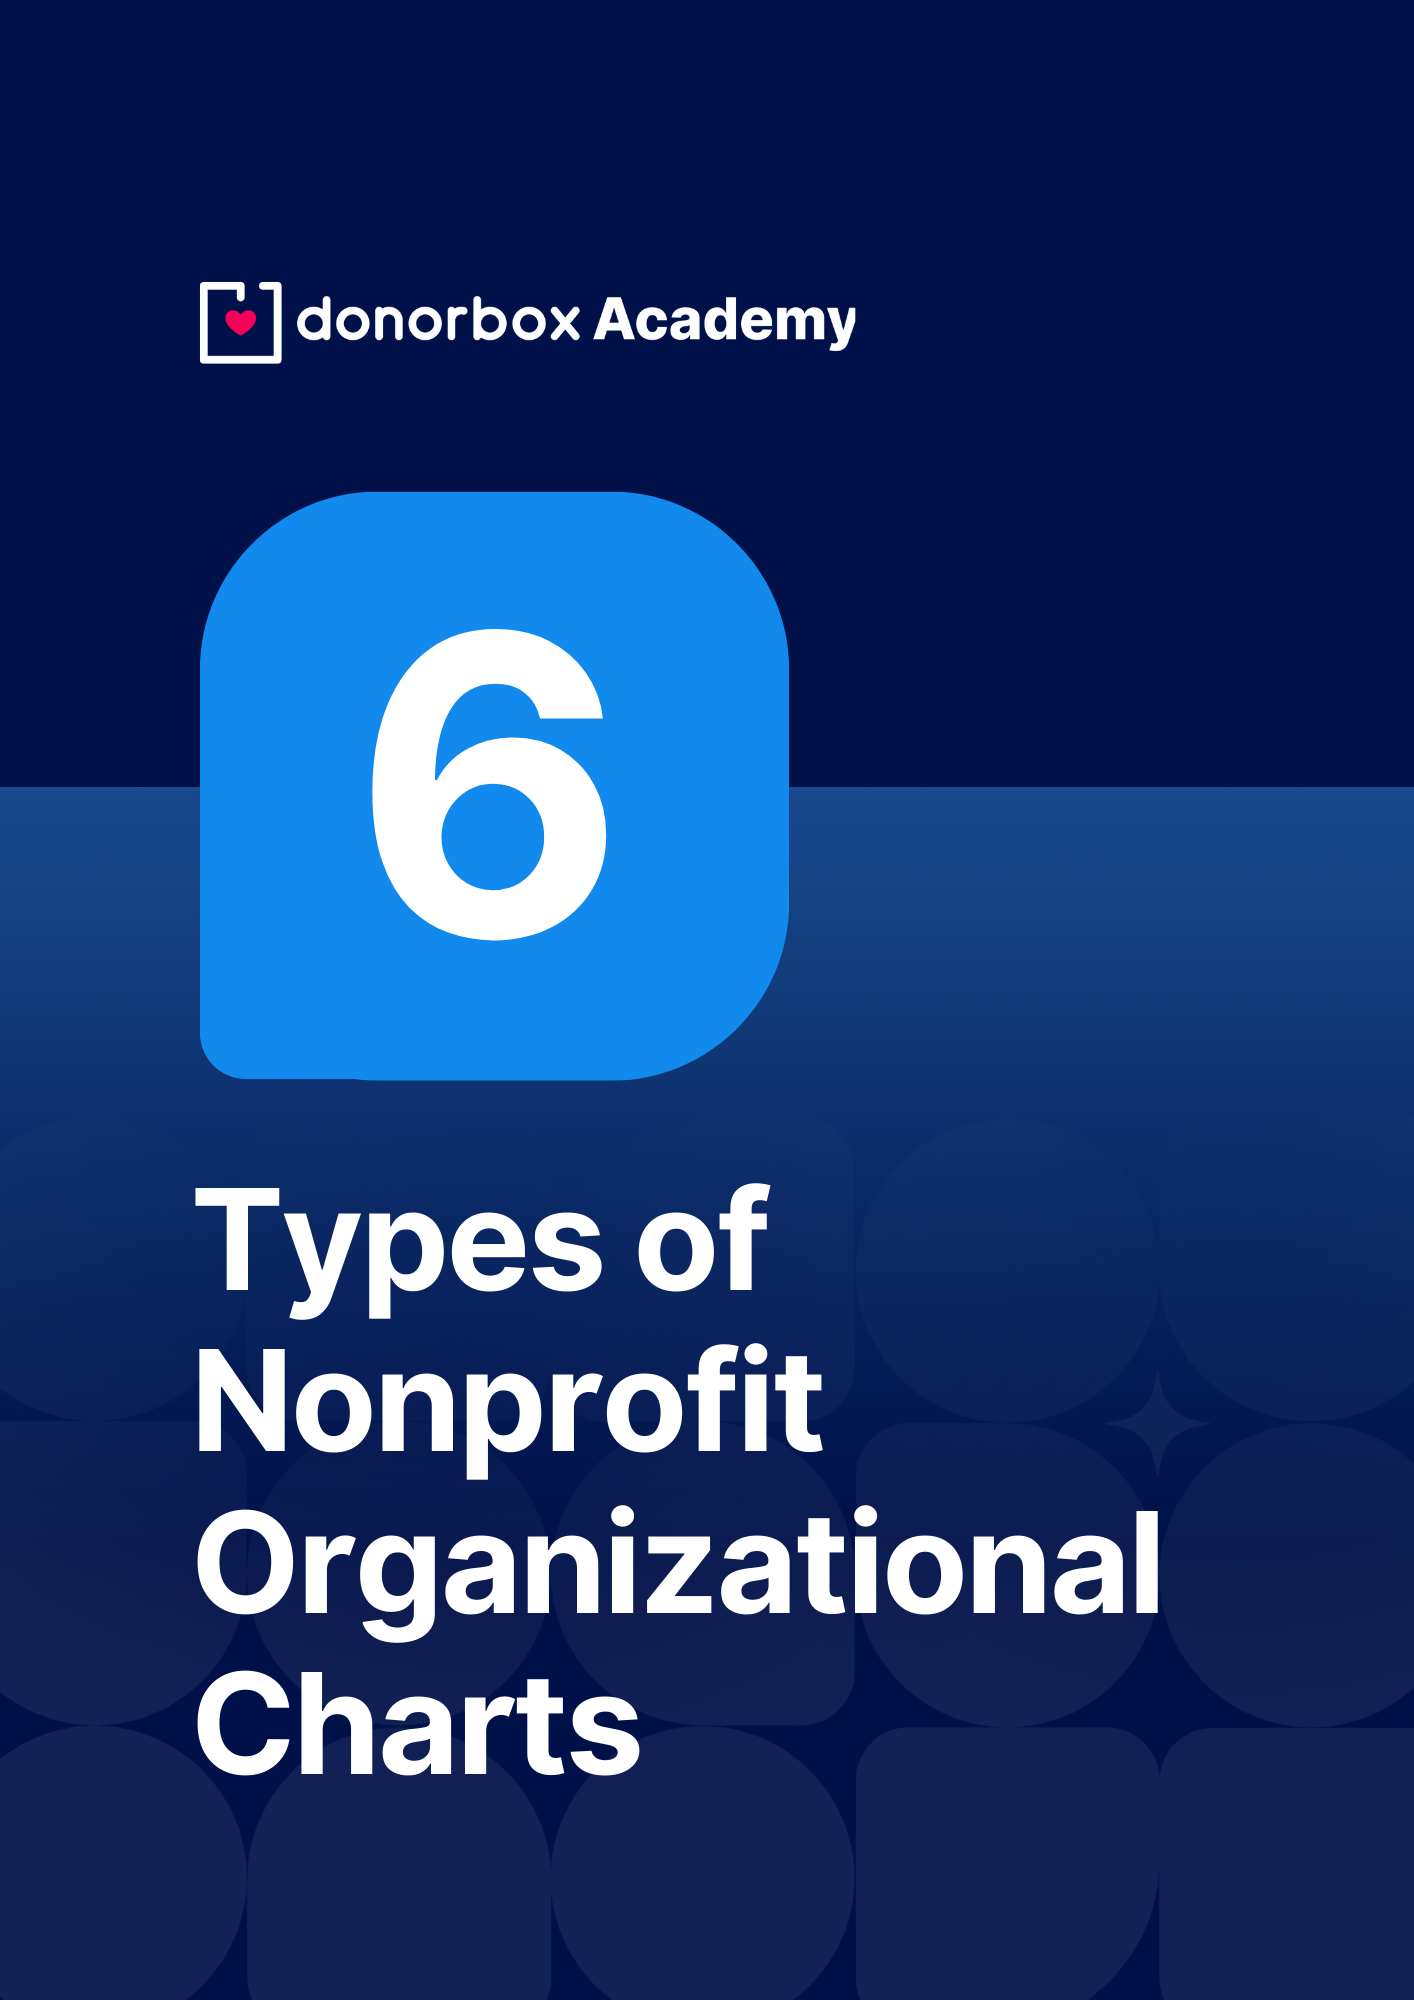 6 Types of Nonprofit Organizational Charts